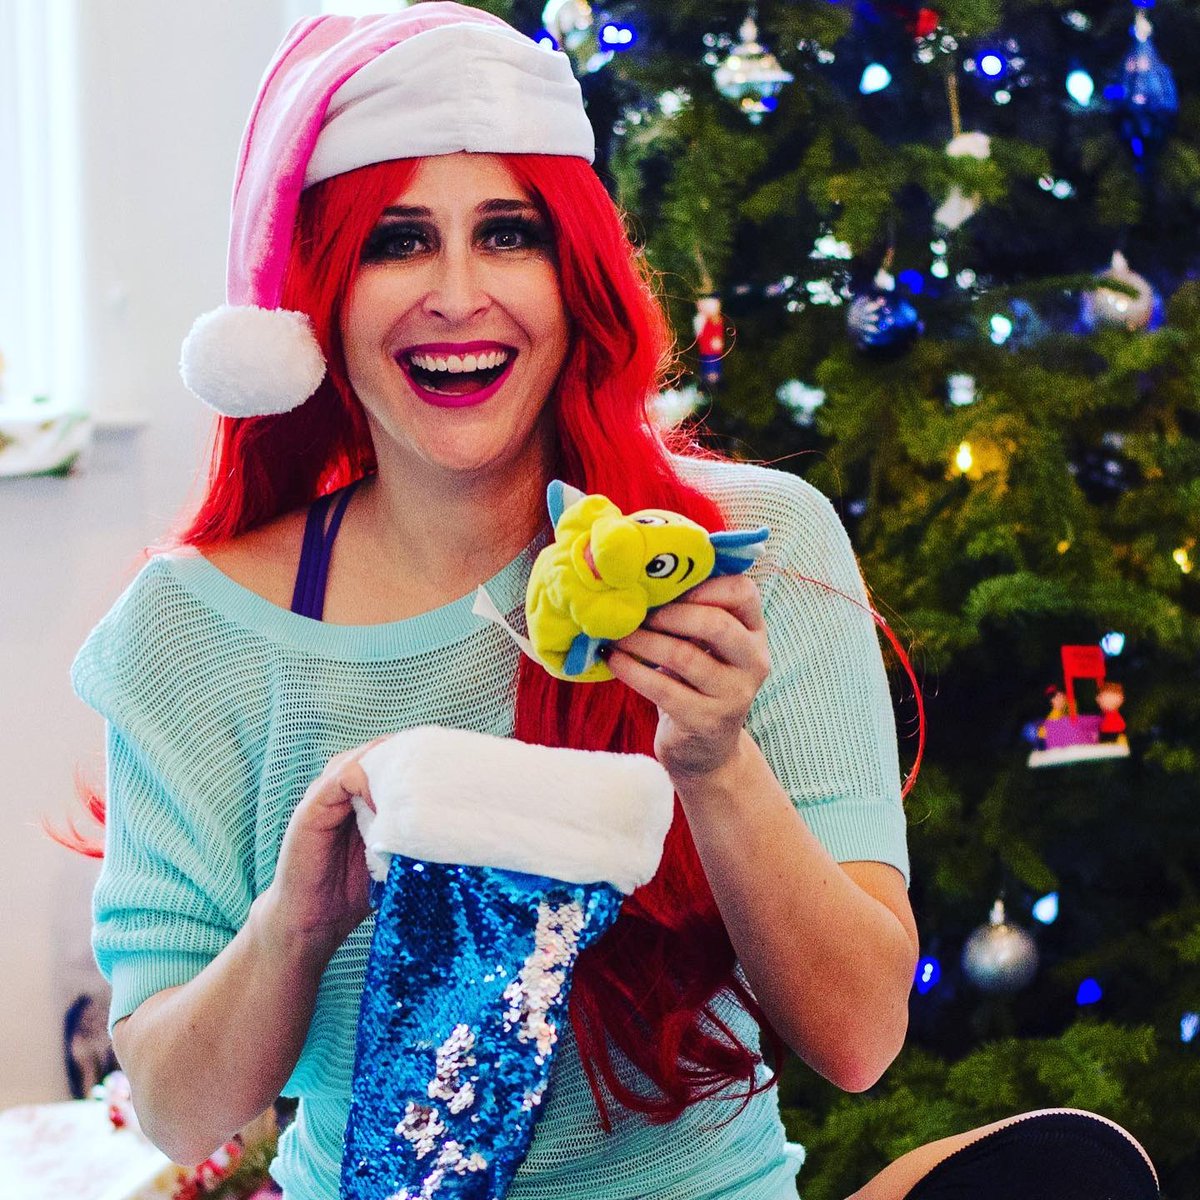 What did Ariel get for Christmas? #stocking #flounder #ariel #santa #fin #littlemermaid #arielcosplay #mermaid #mermaidchristmas #cosplay #cosplaylife #cosplaygirl #cosplayer #cosplayphotography #cosplaymakeup #disney #disneychristmas #disneycosplay #disneycosplayer #disneyariel